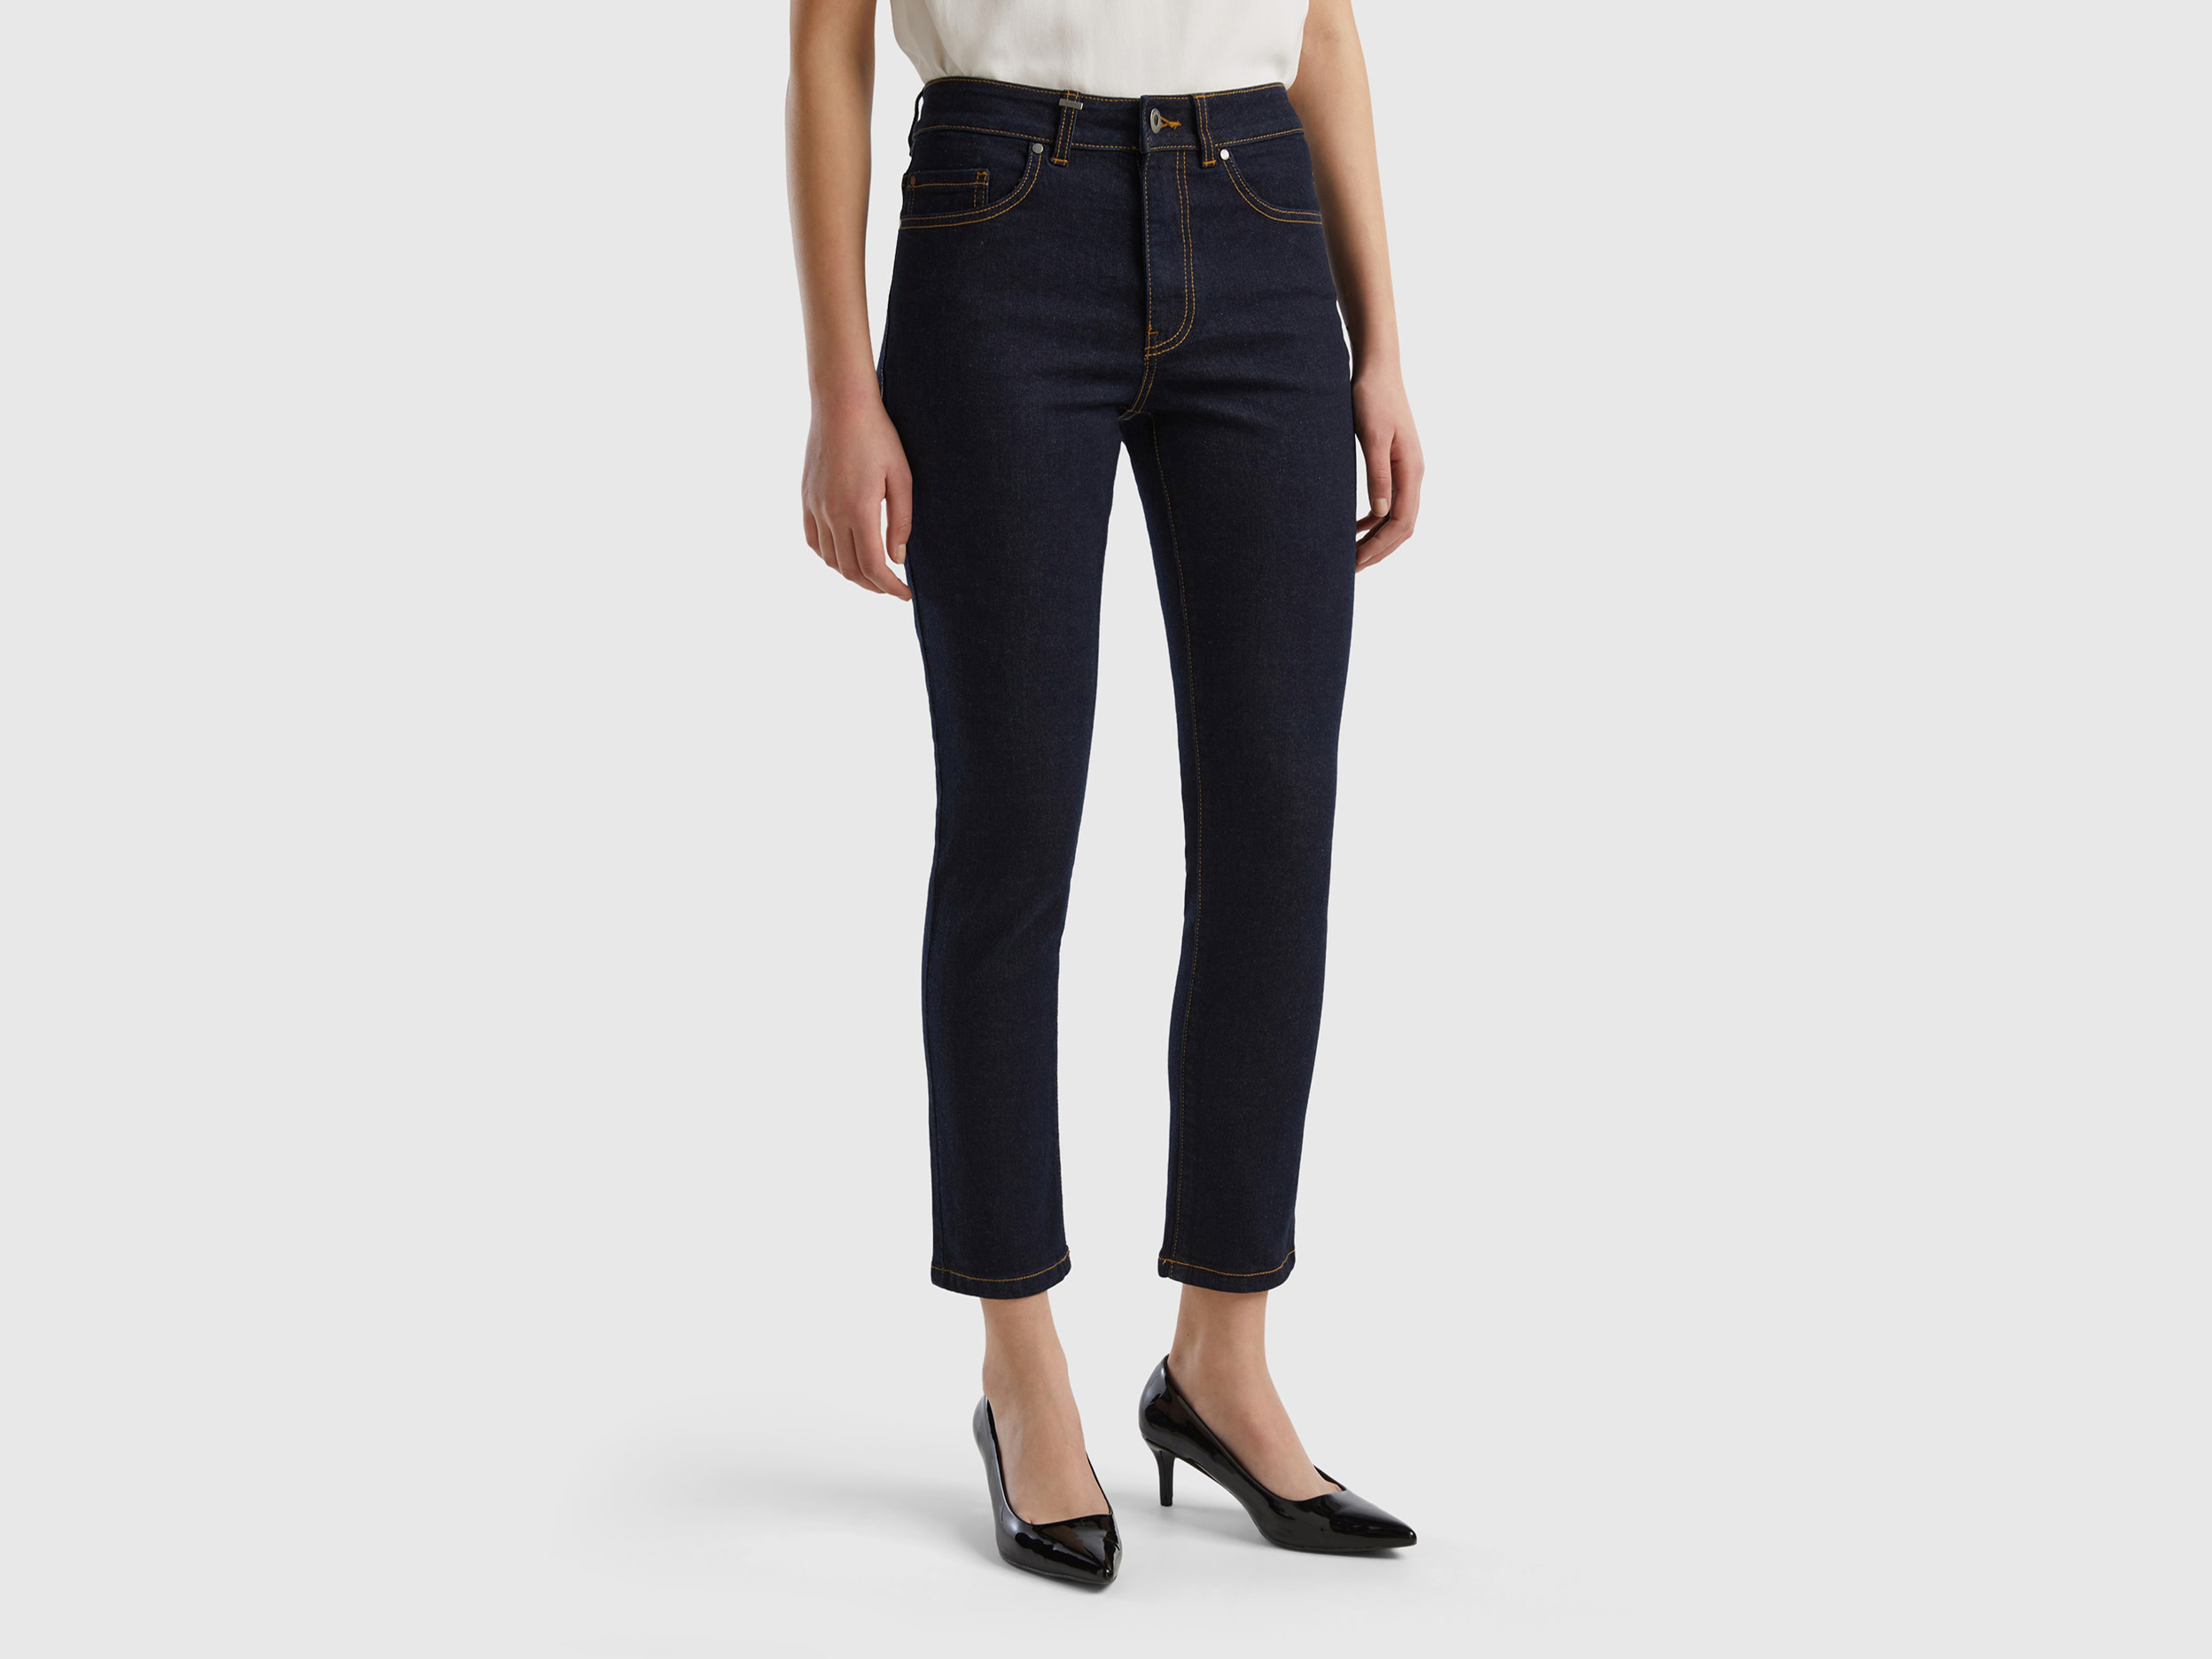 Benetton, Slim Fit High-waisted Jeans, size 28, Dark Blue, Women